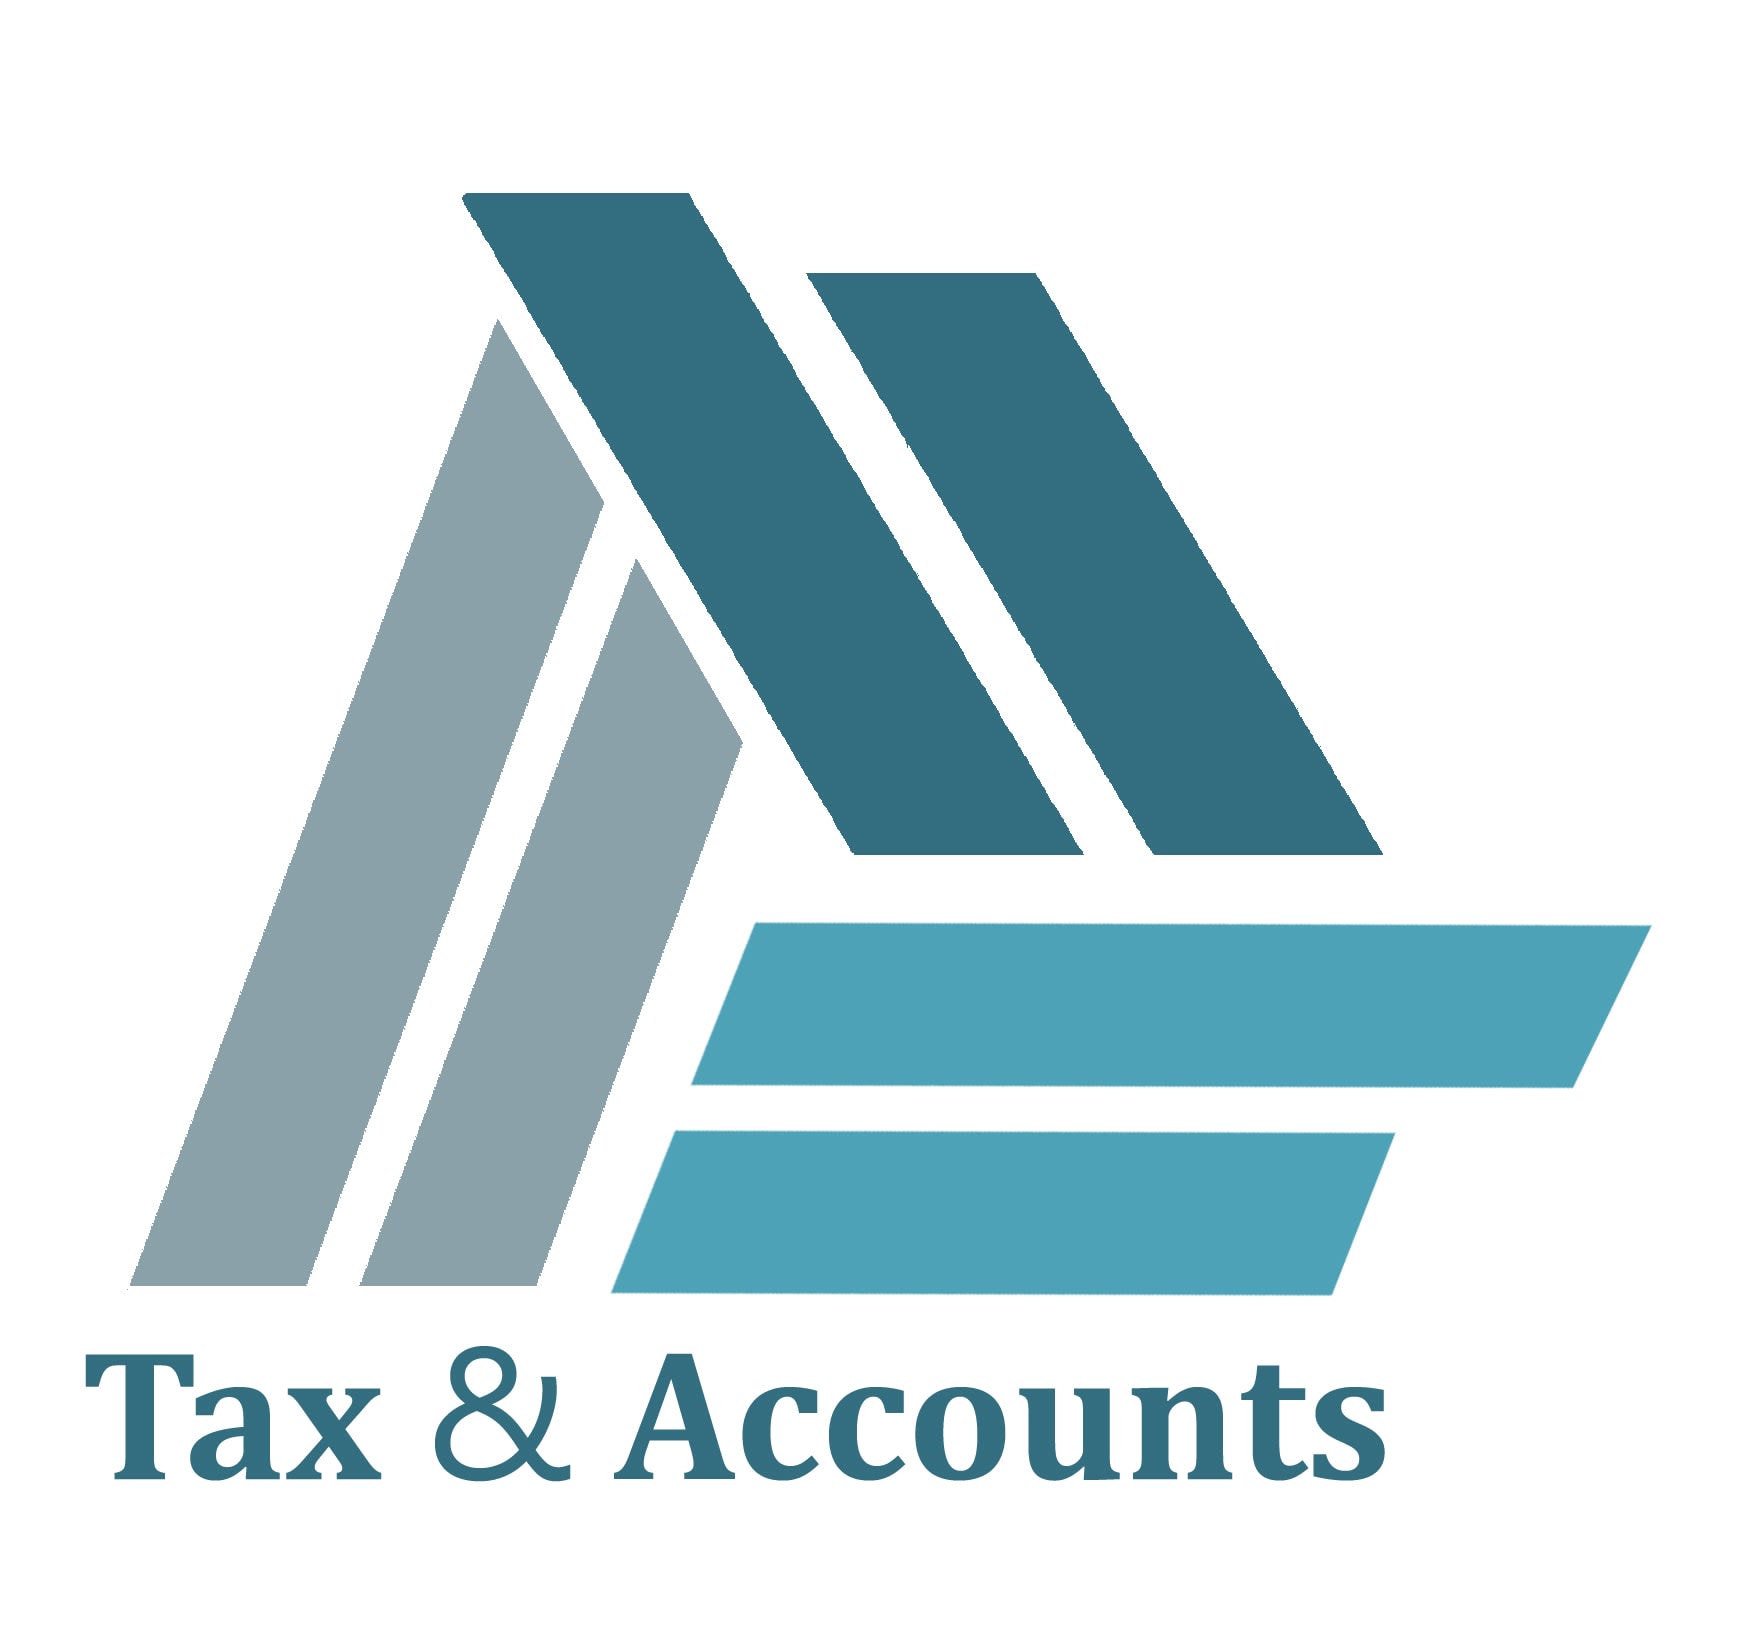 Tax & Accounts